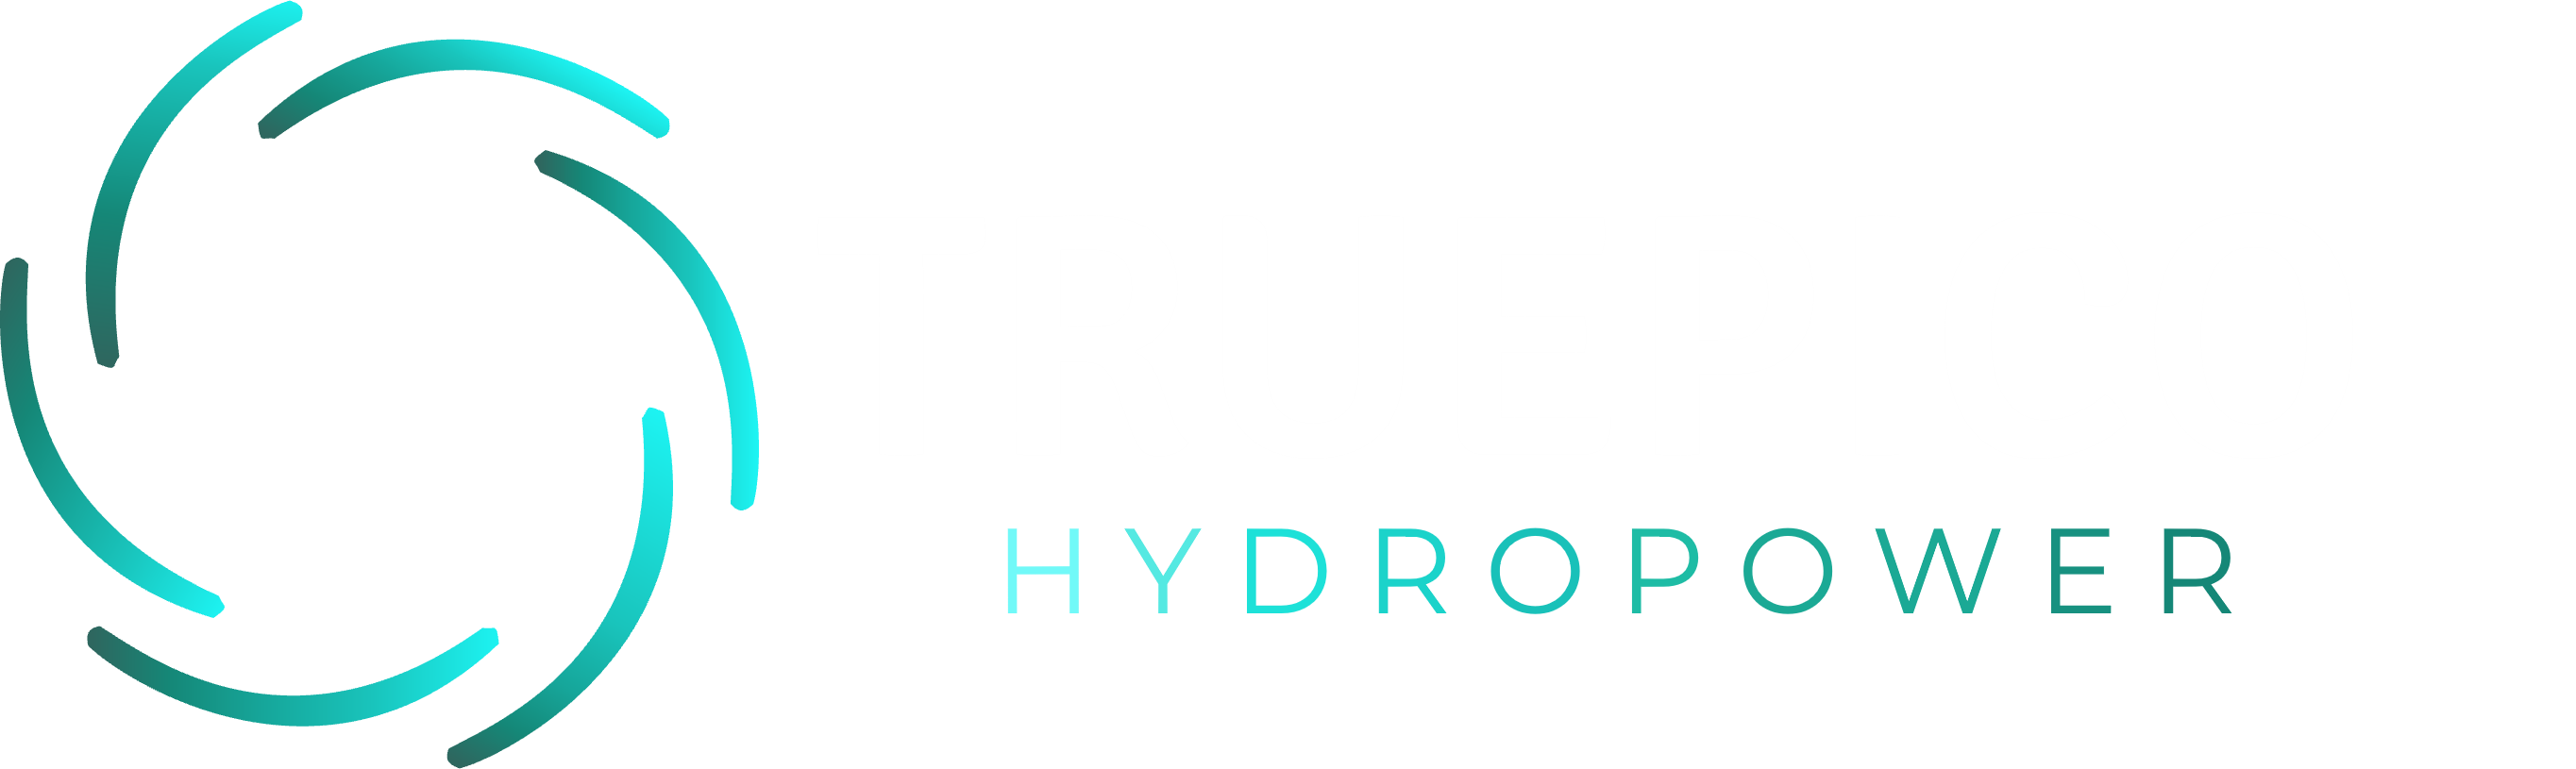 TruePico Hydropower